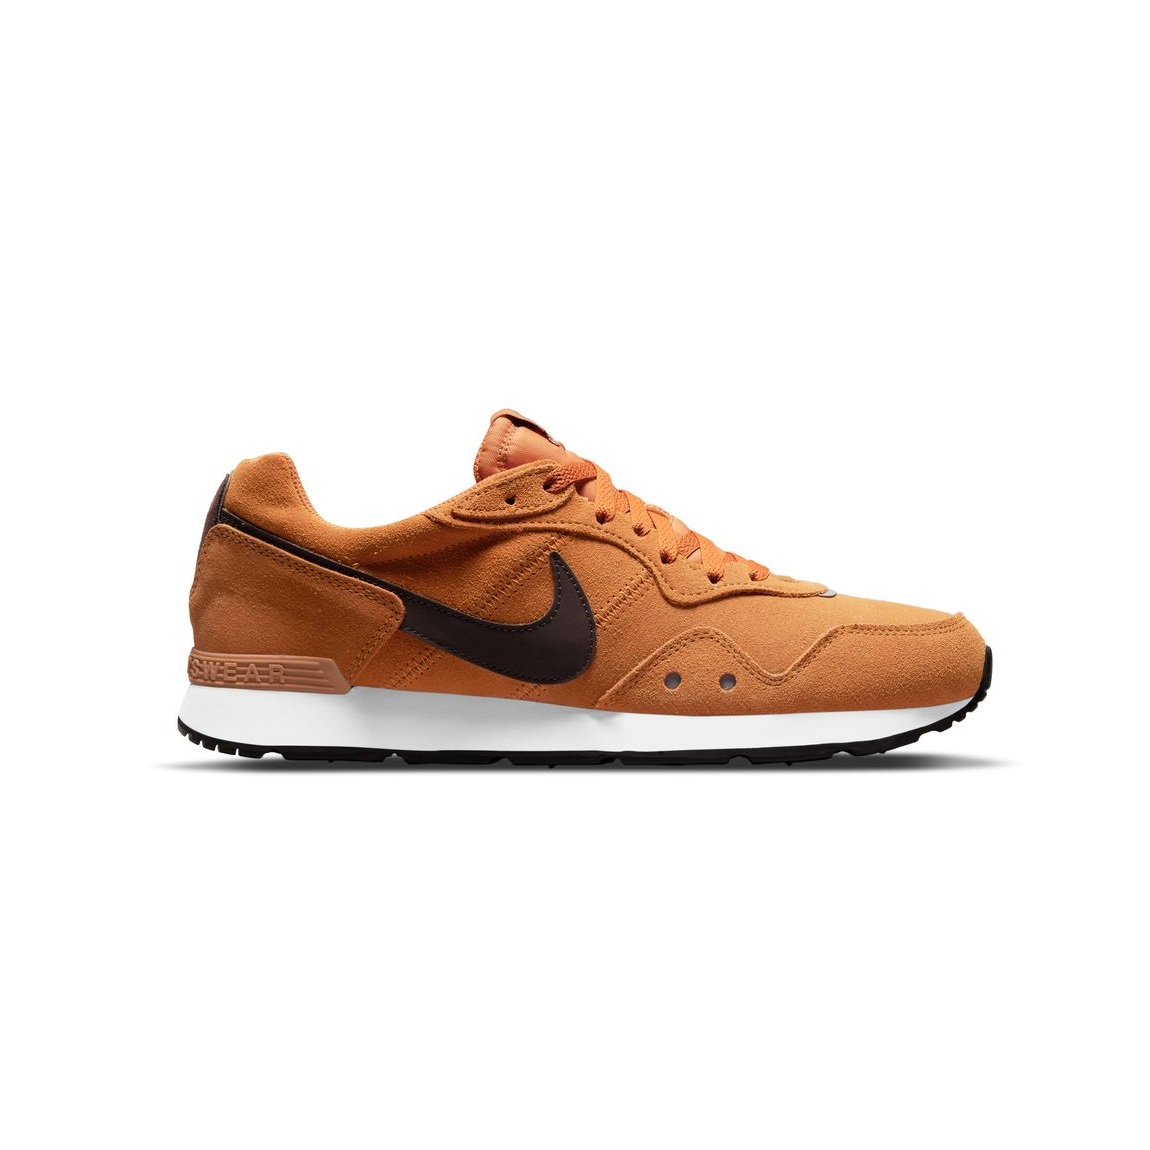 Zapatillas hombre - Nike Venture Runner Suede CQ4557-200 | Ferrer Sport Tienda online de